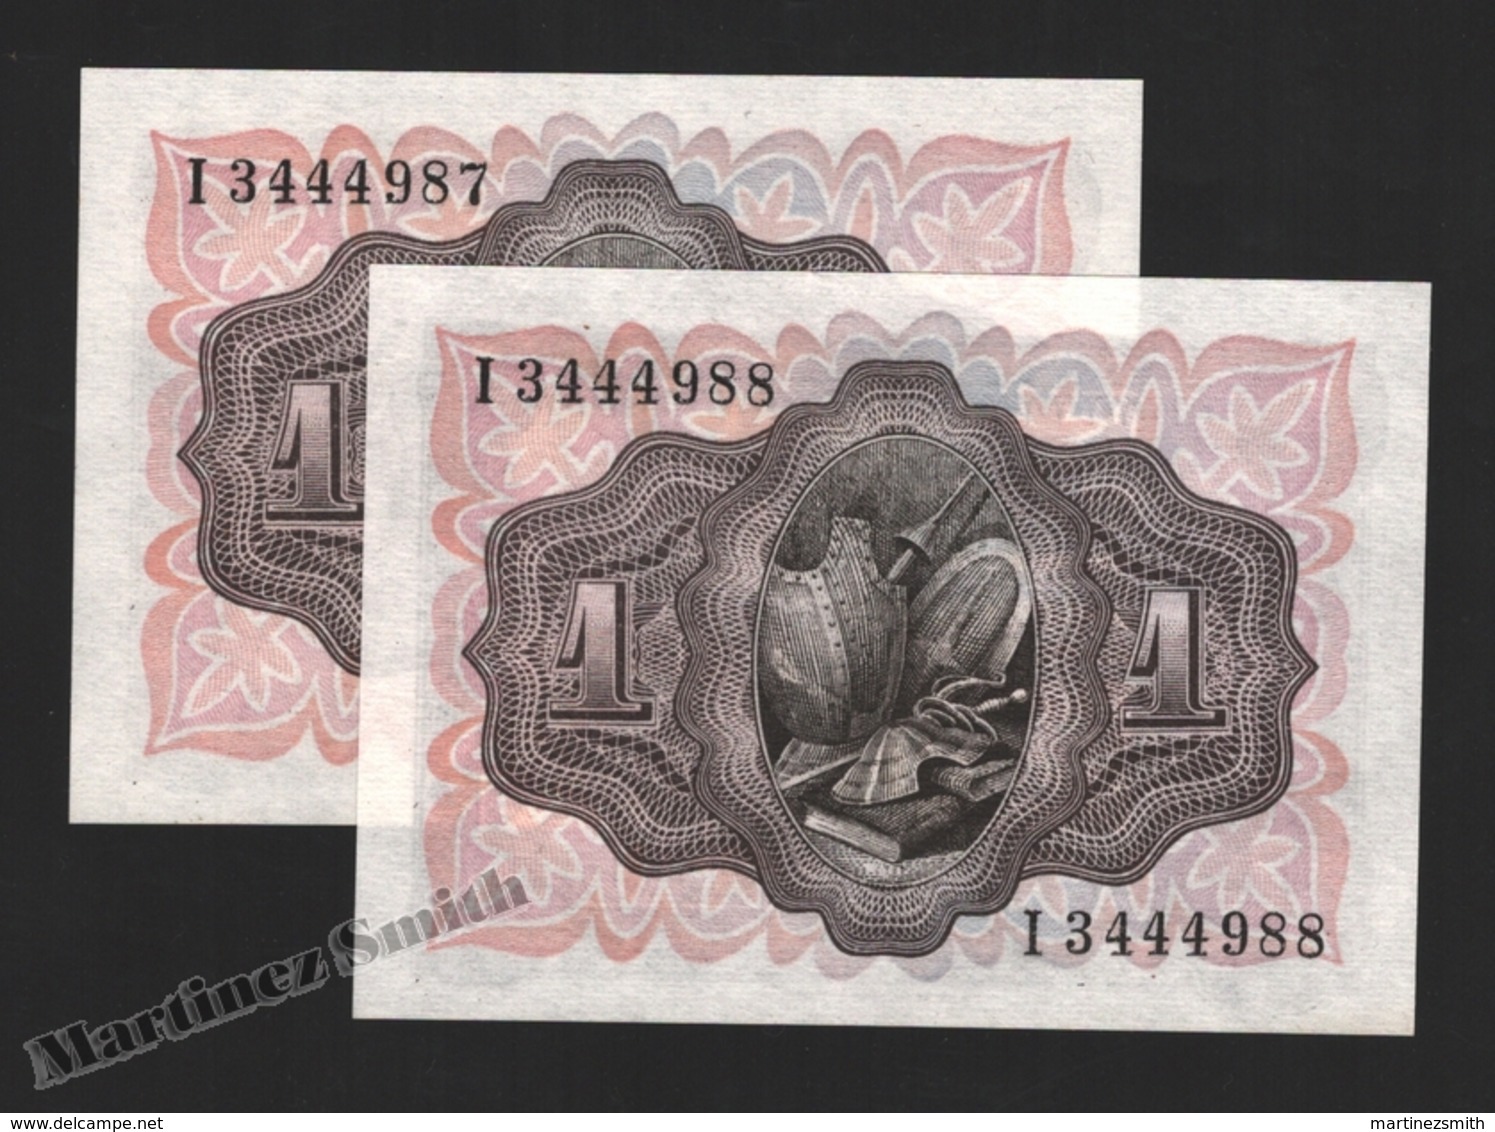 Banknote Spain -  1 Peseta – November 1951 – Don Quijote – Correlative Pair - Condition UNC - Pick 139a - 5 Pesetas